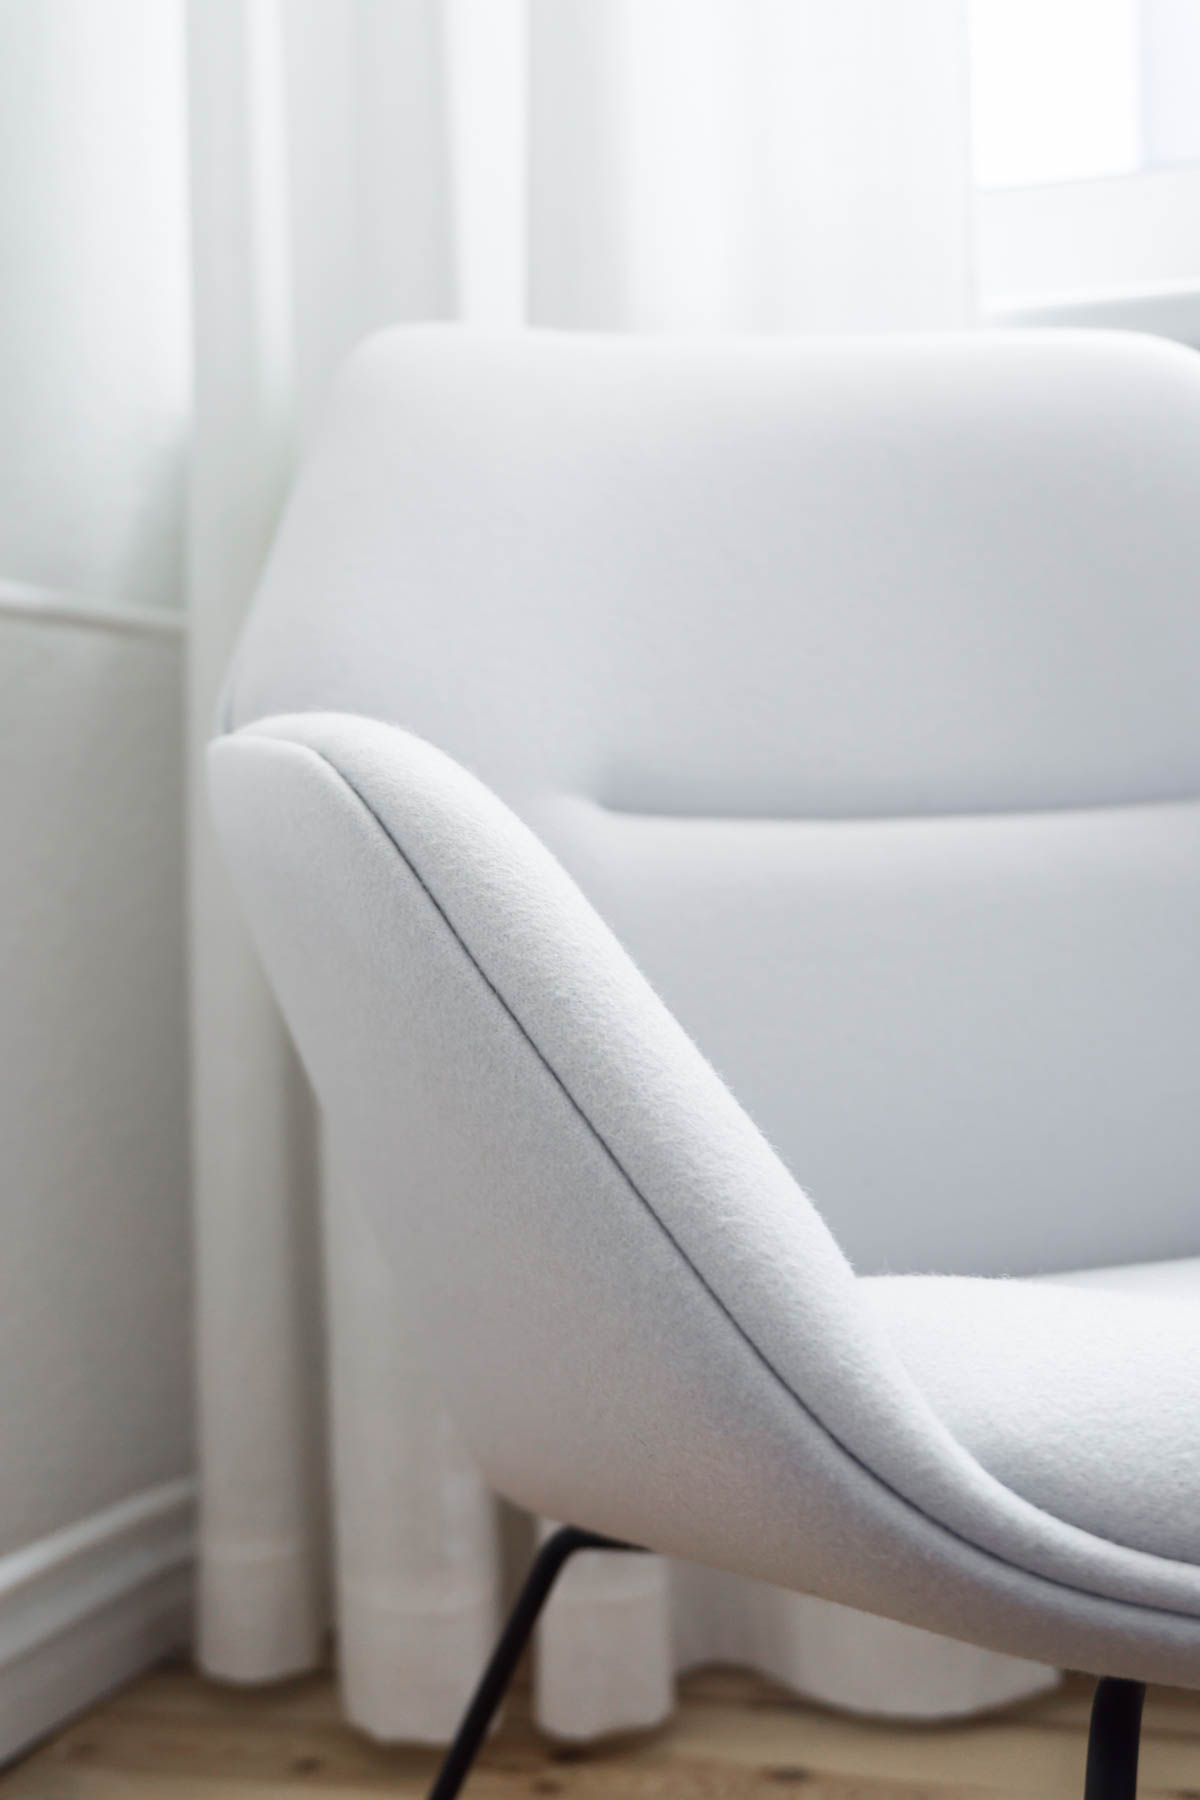 Chair Details - Minimalist Bedroom, Scandinavian Design, Calming Interior // RG Daily Blog